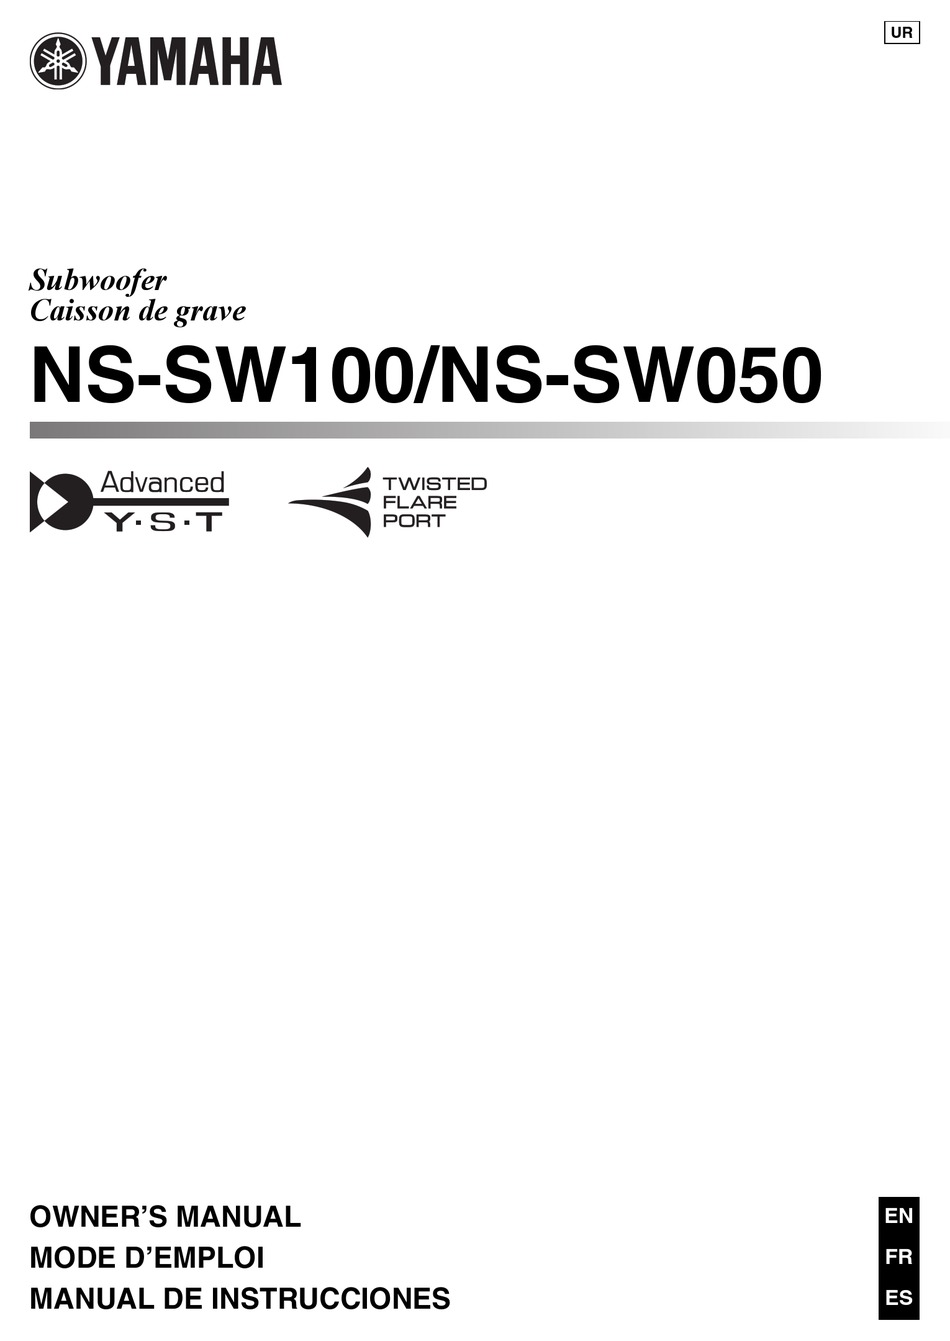 YAMAHA NS-SW050 OWNER'S MANUAL Pdf Download | ManualsLib